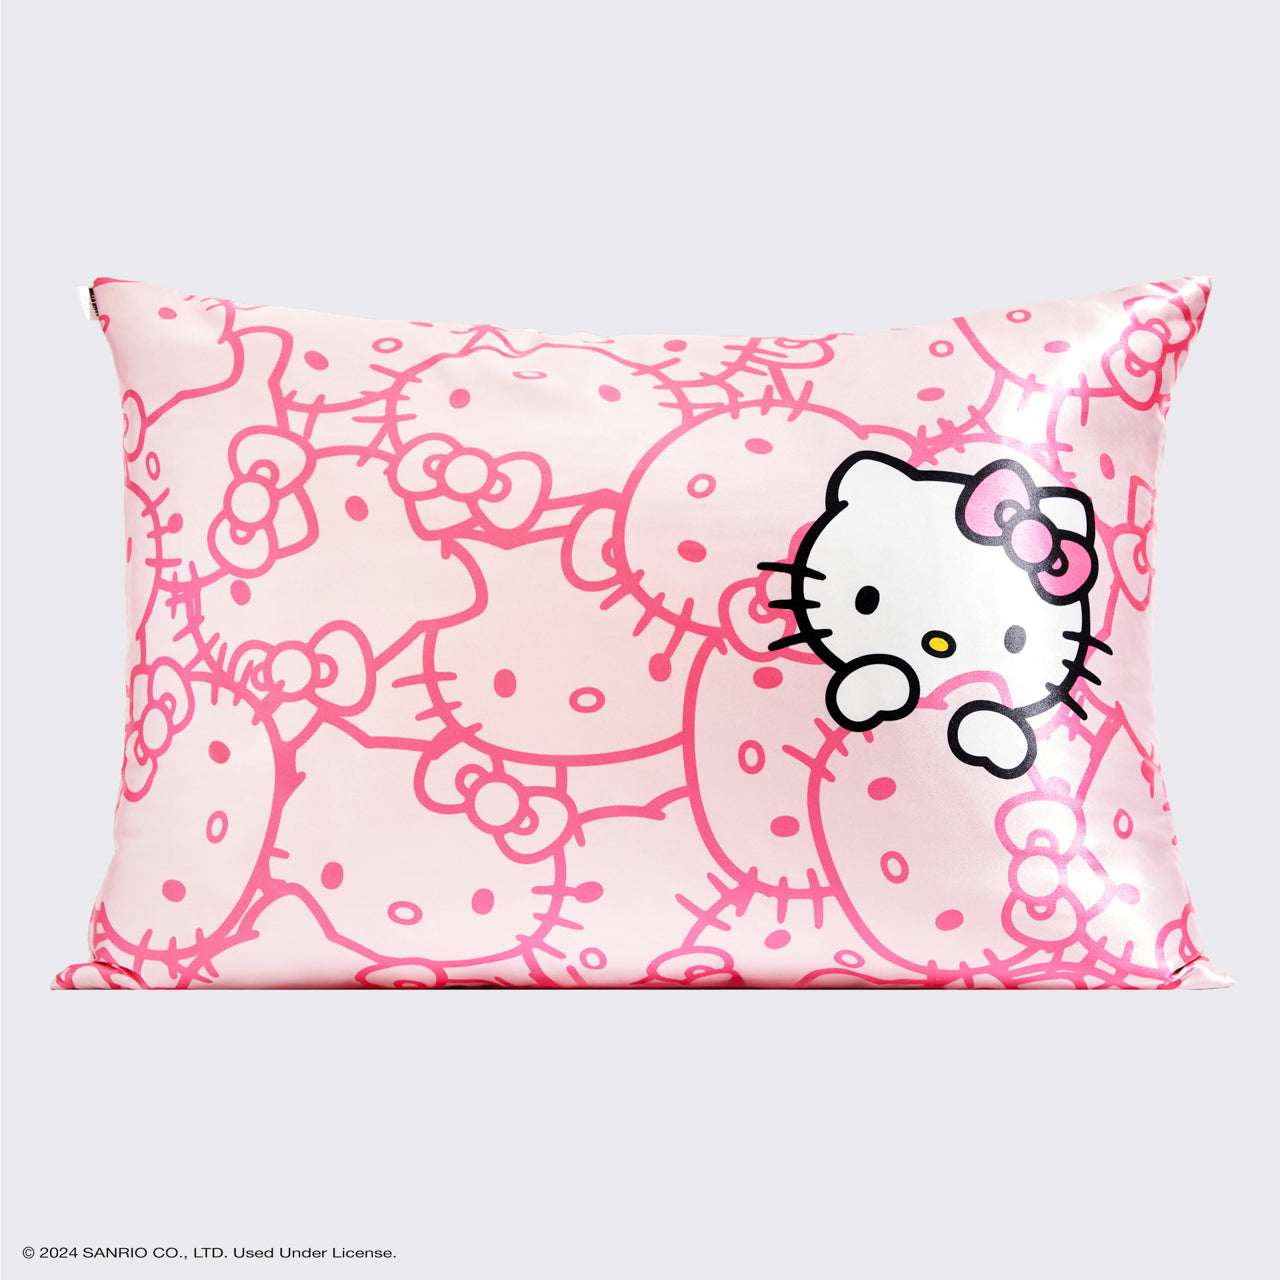 Hello Kitty x Kitsch Satin Pillowcase - Pink Hello Kitty Faces